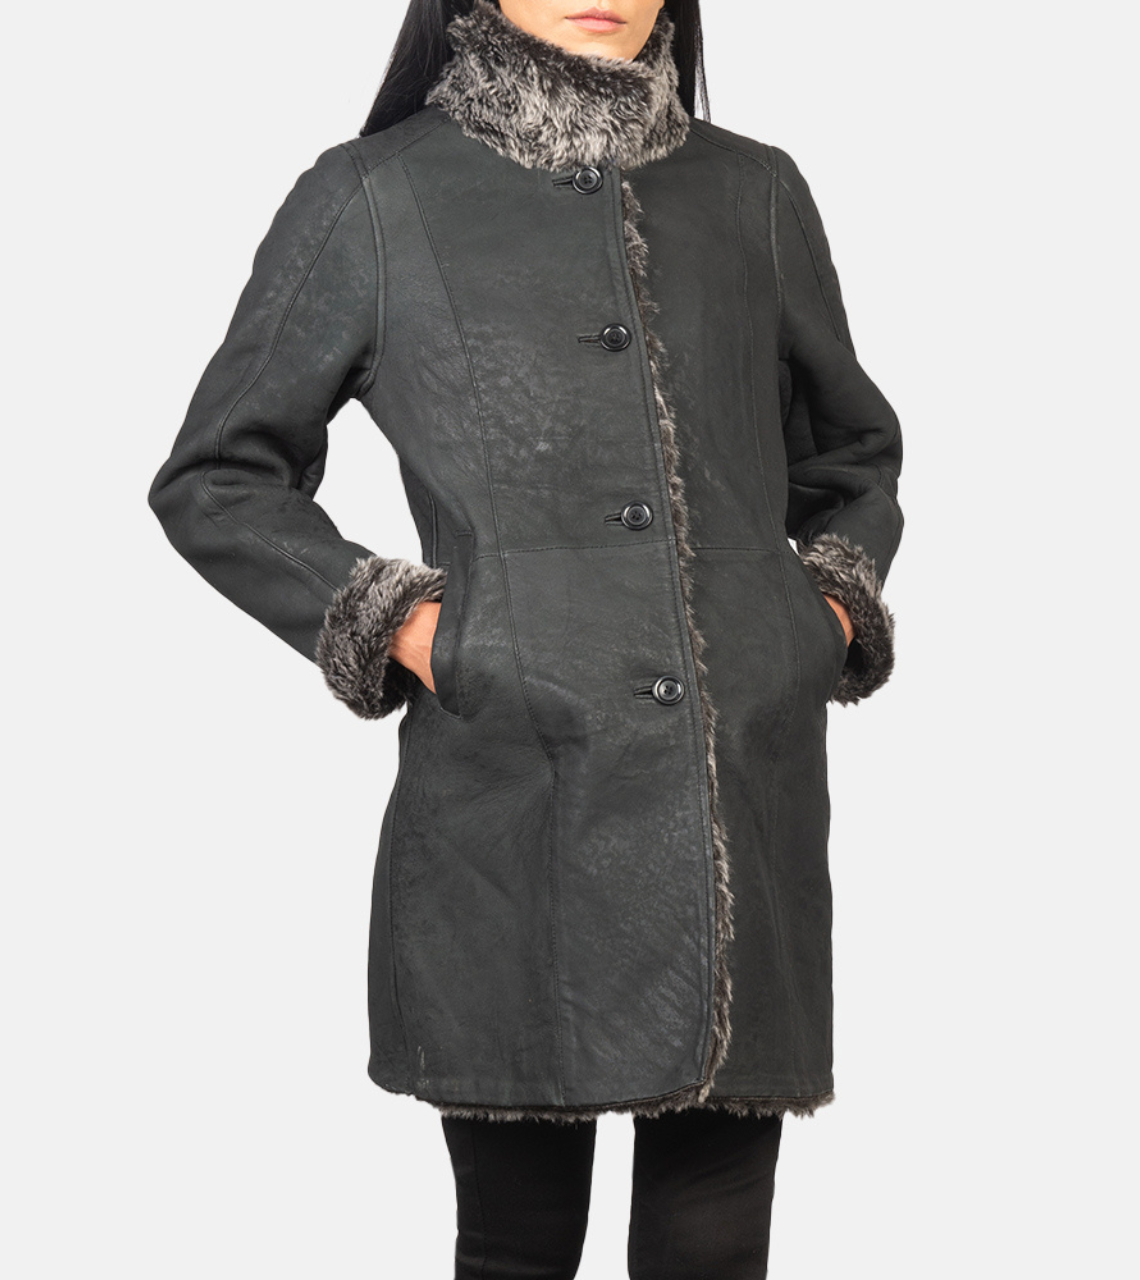  Exotique Furry Women's Leather Coat 